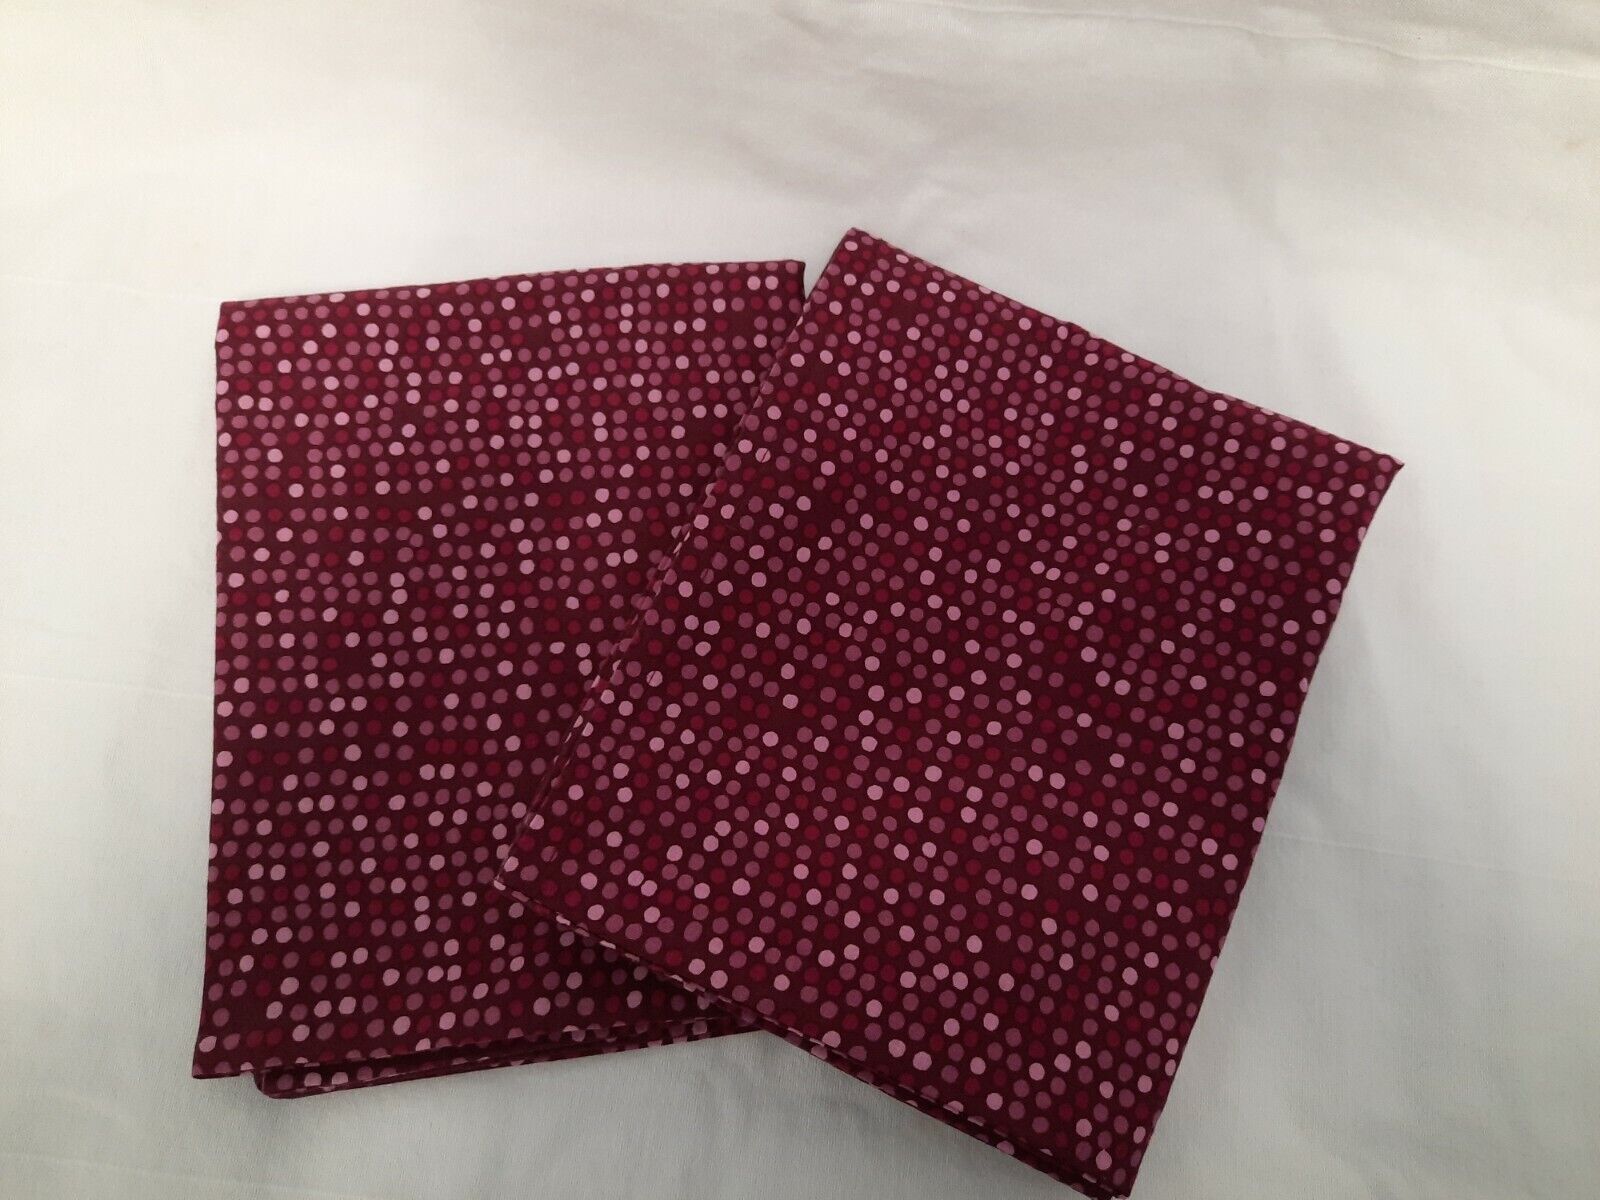 Pair Of Standard Size Ikea Smorboll Polka Dot Berry Pillow Shams ~ Very Nice